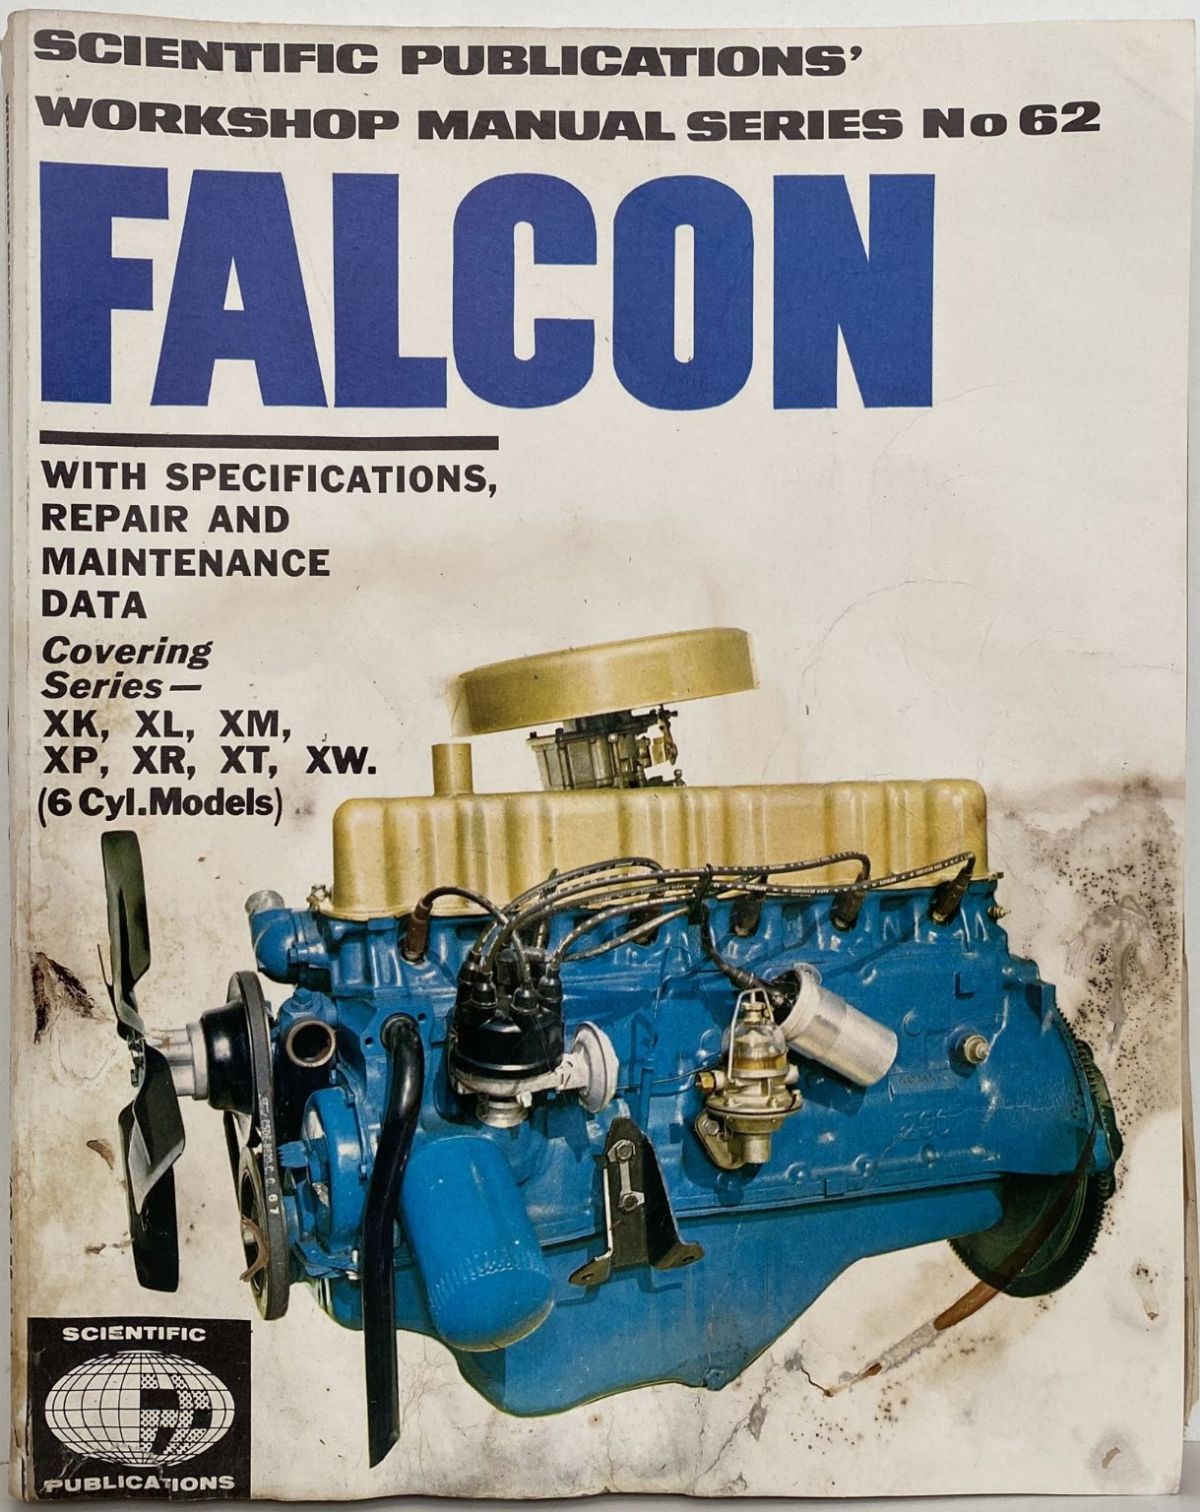 FORD FALCON Workshop Manual - Series XK, XL, XM, XP, XR, XT, XW 6 cylinders